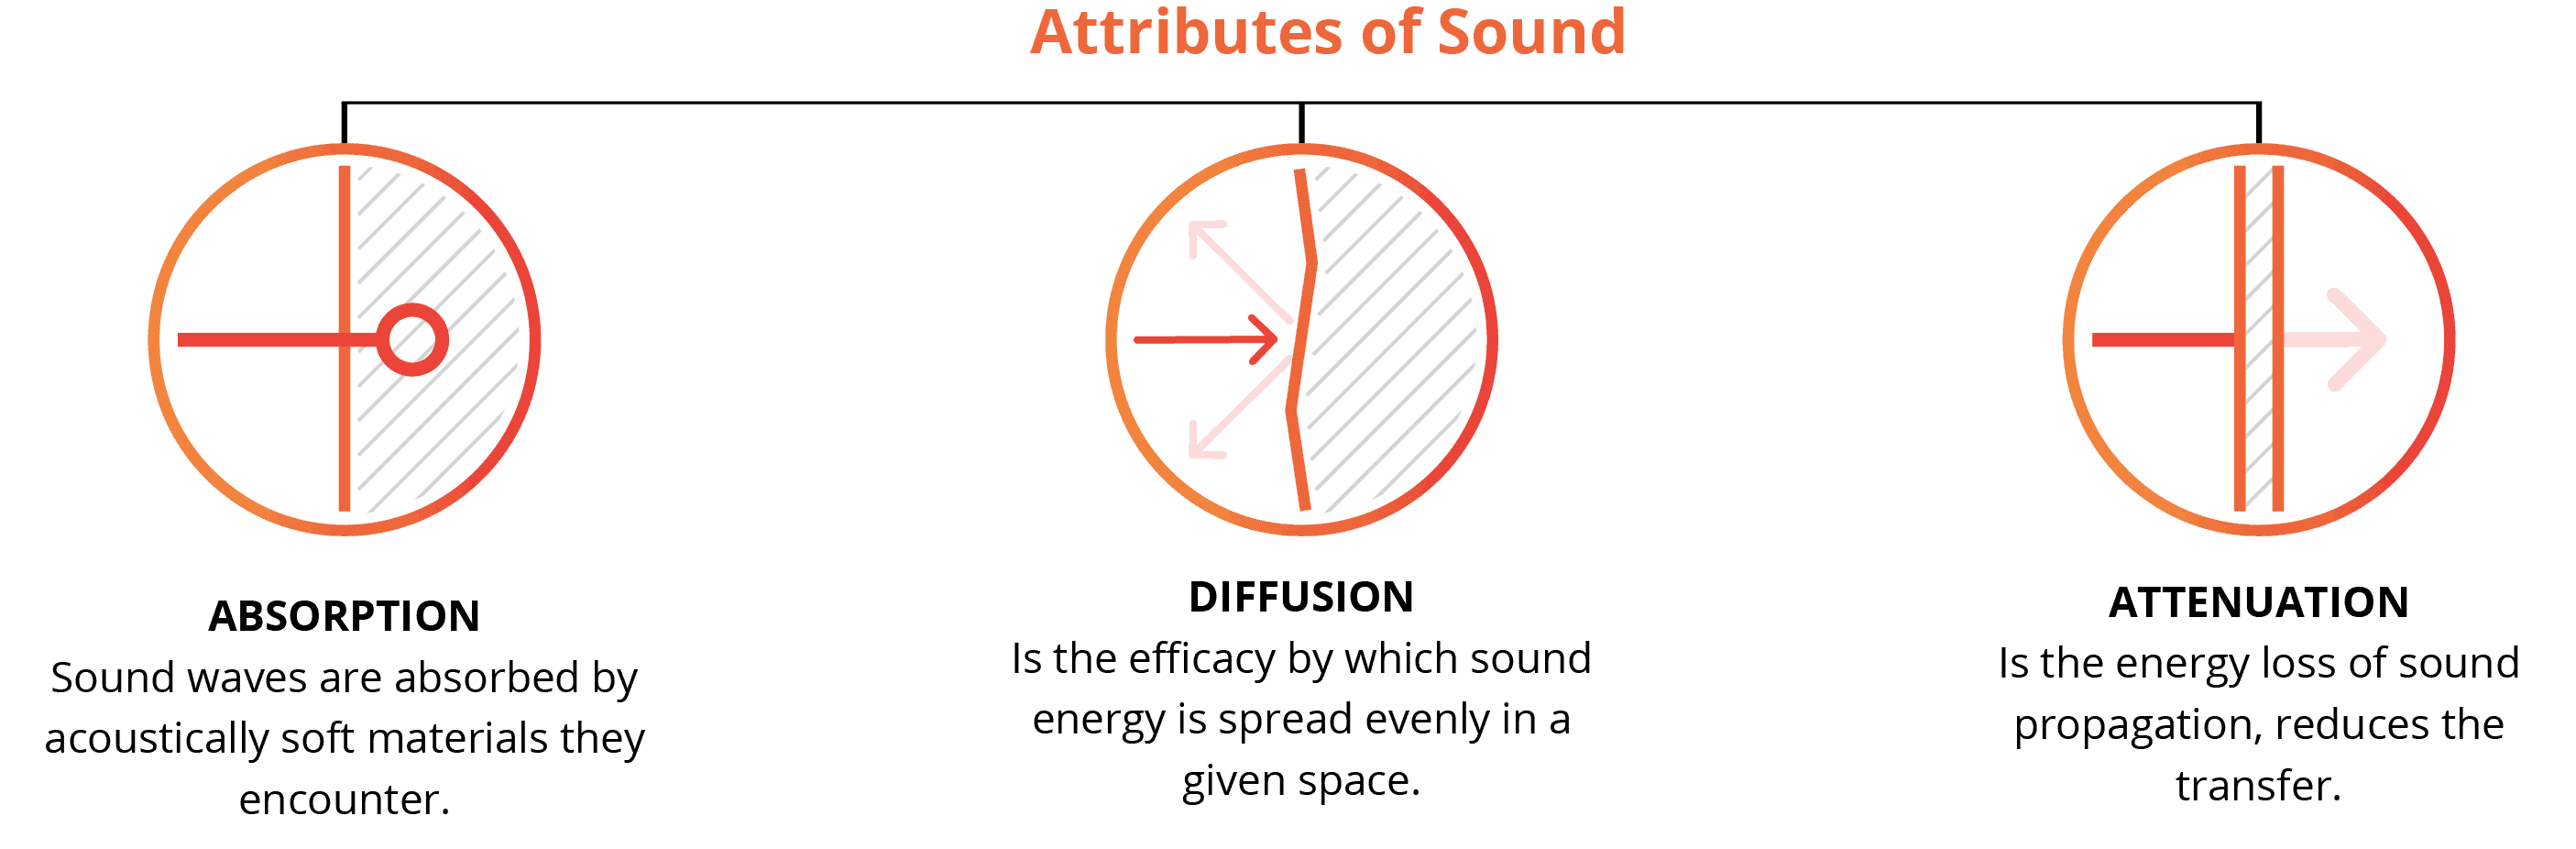 Attributes of sound